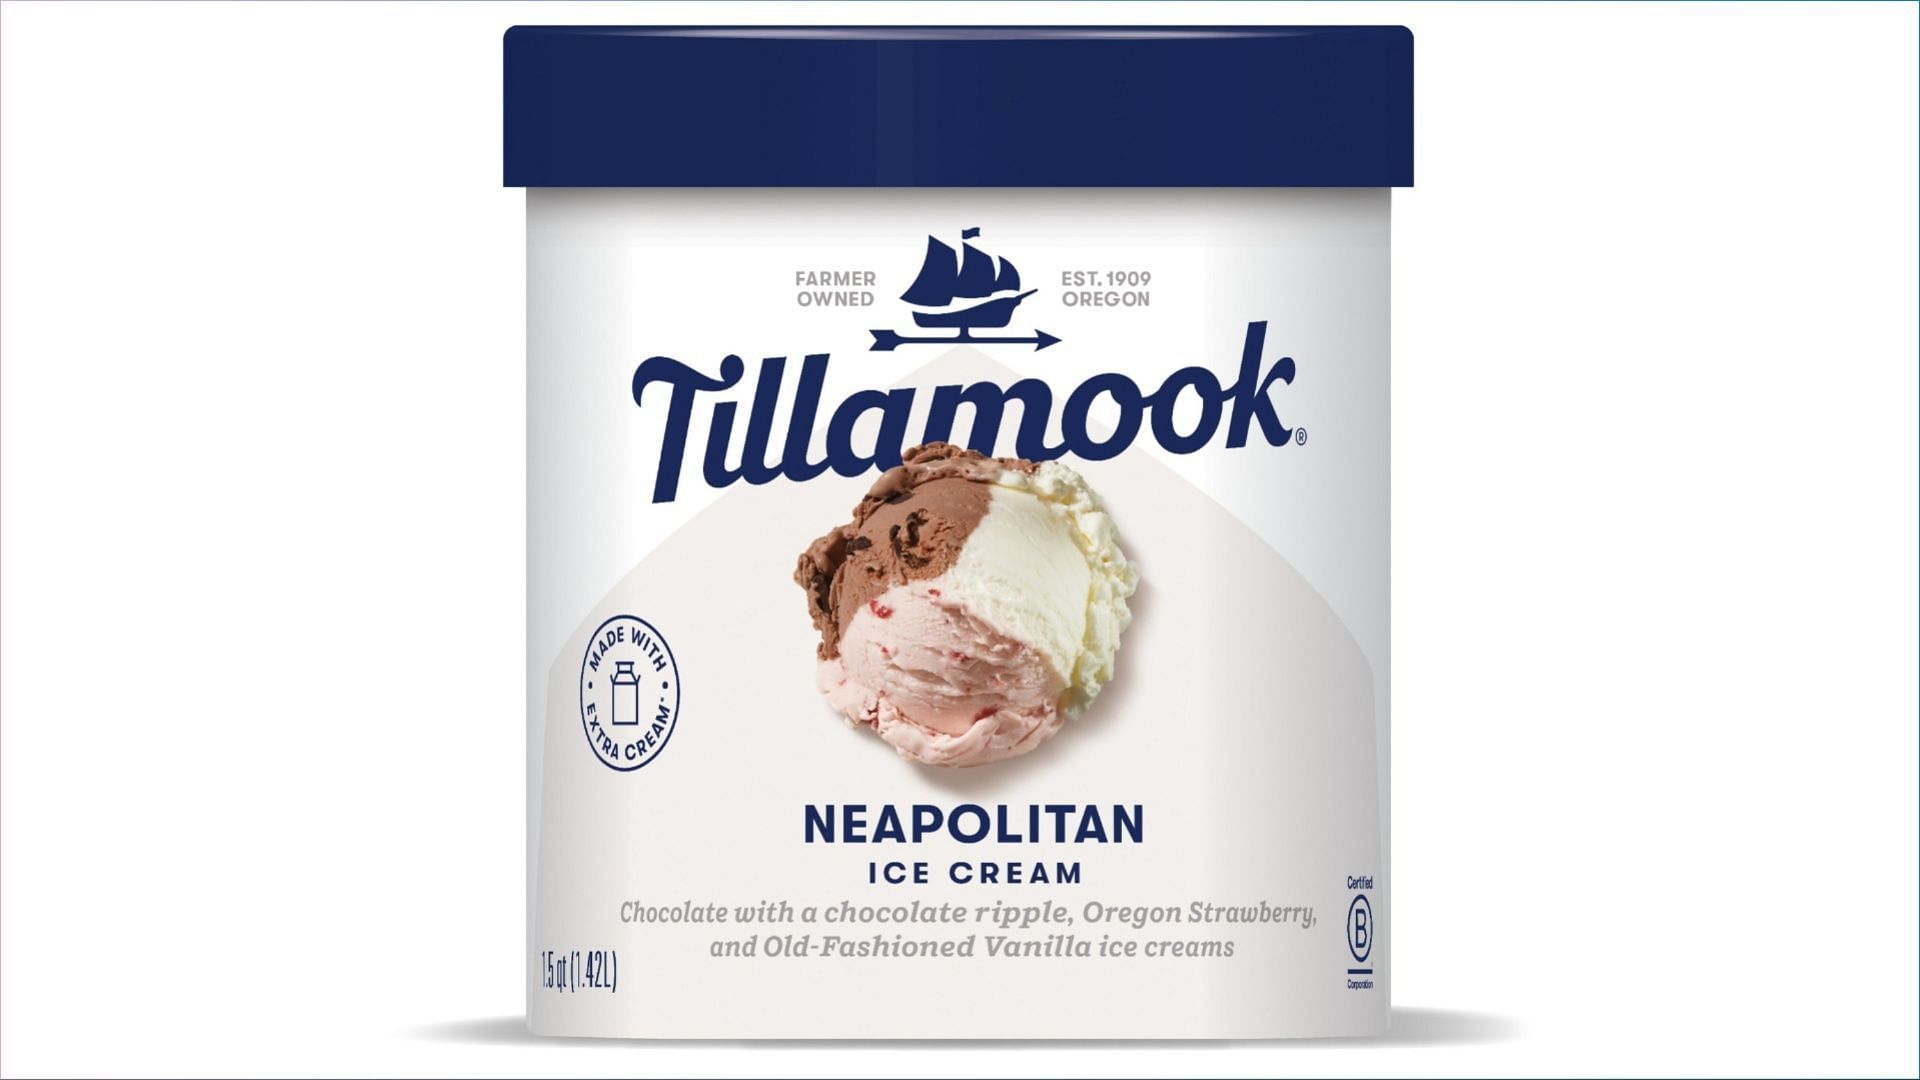 The new Neapolitan ice cream (Image via TCCA)